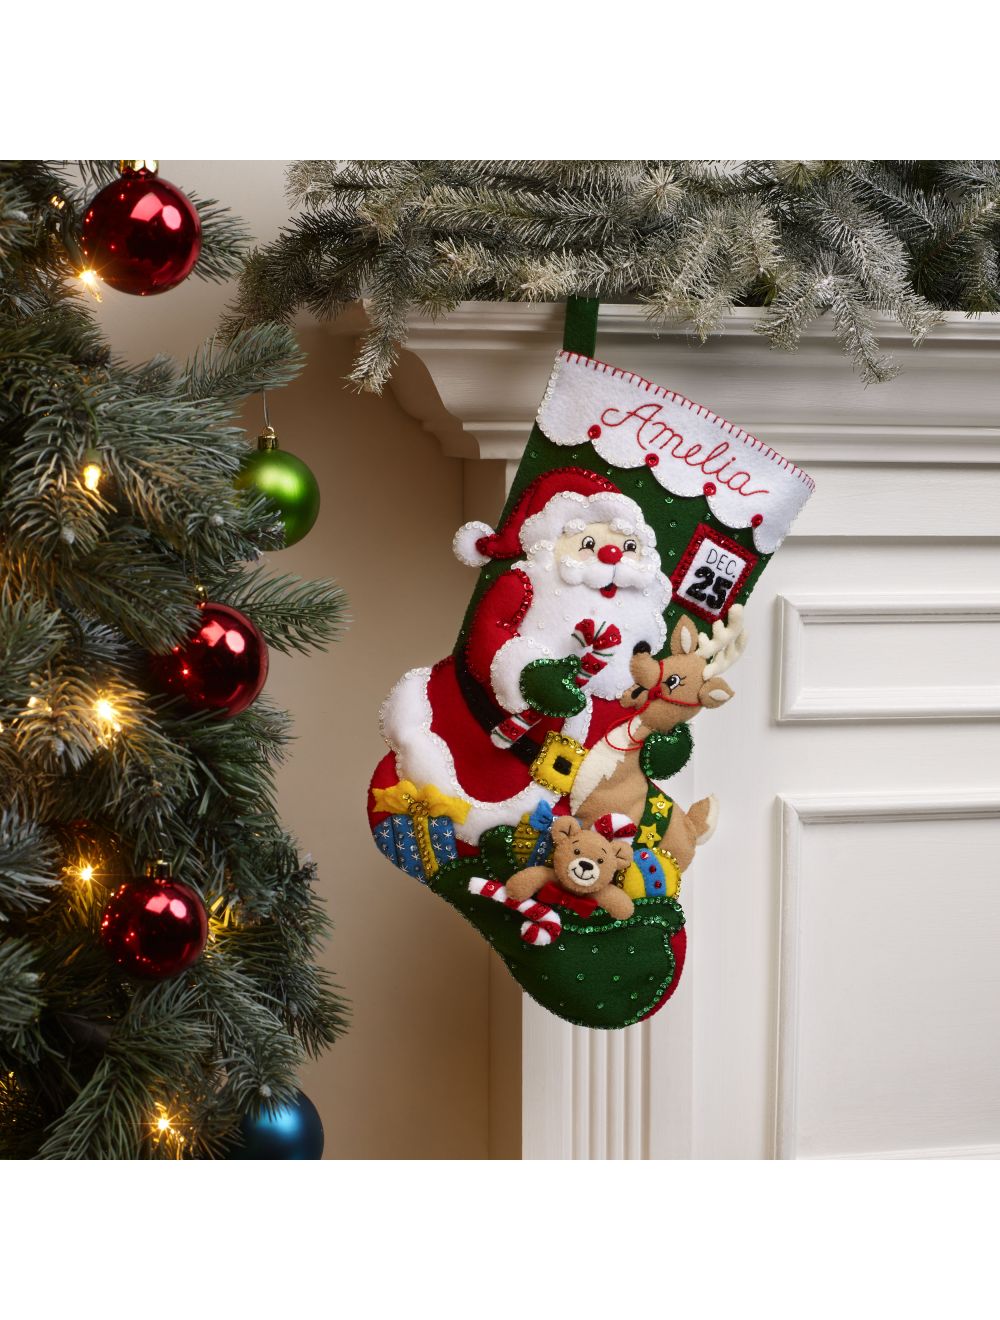  Bucilla 18-Inch Christmas Stocking Felt Applique Kit